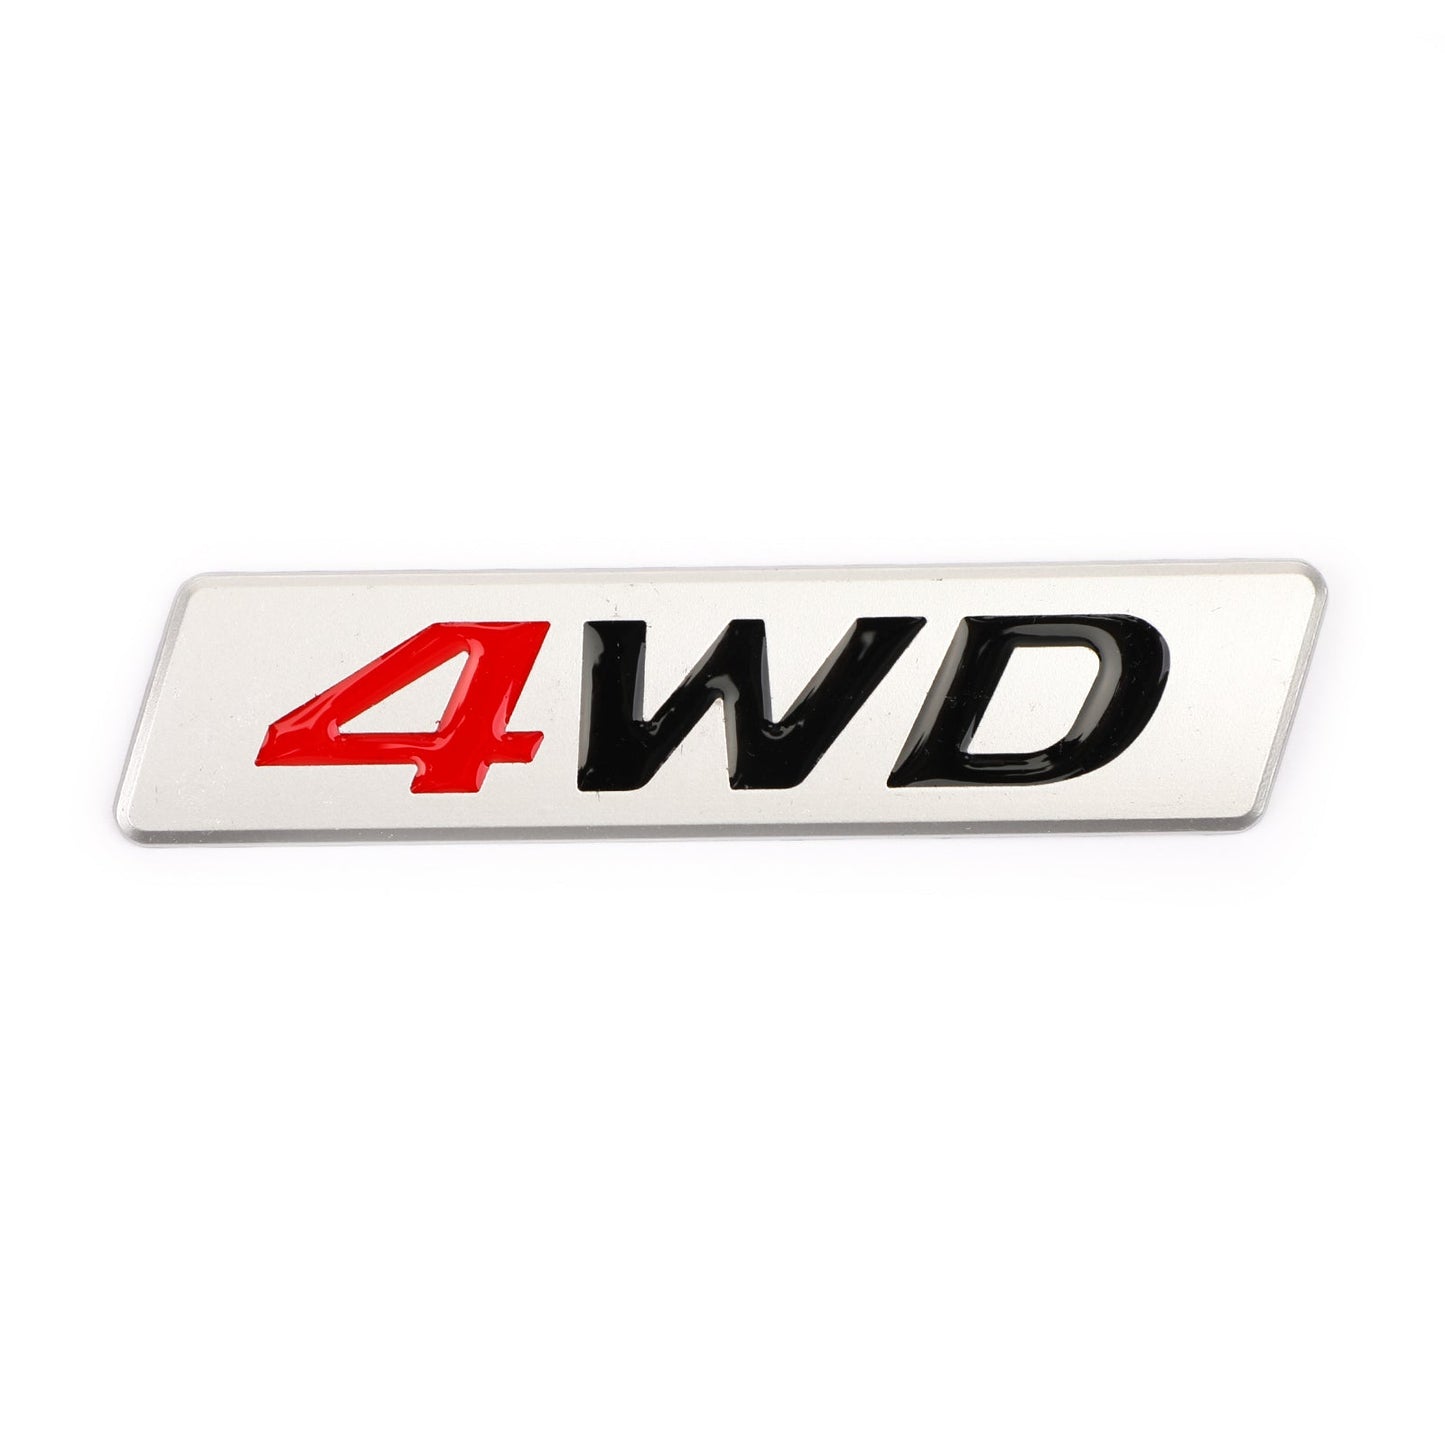 New Metal 4WD Emblem Car Fender Trunk Portellone Distintivo Decalcomanie Adesivo 4WD 4X4 SUV Generico